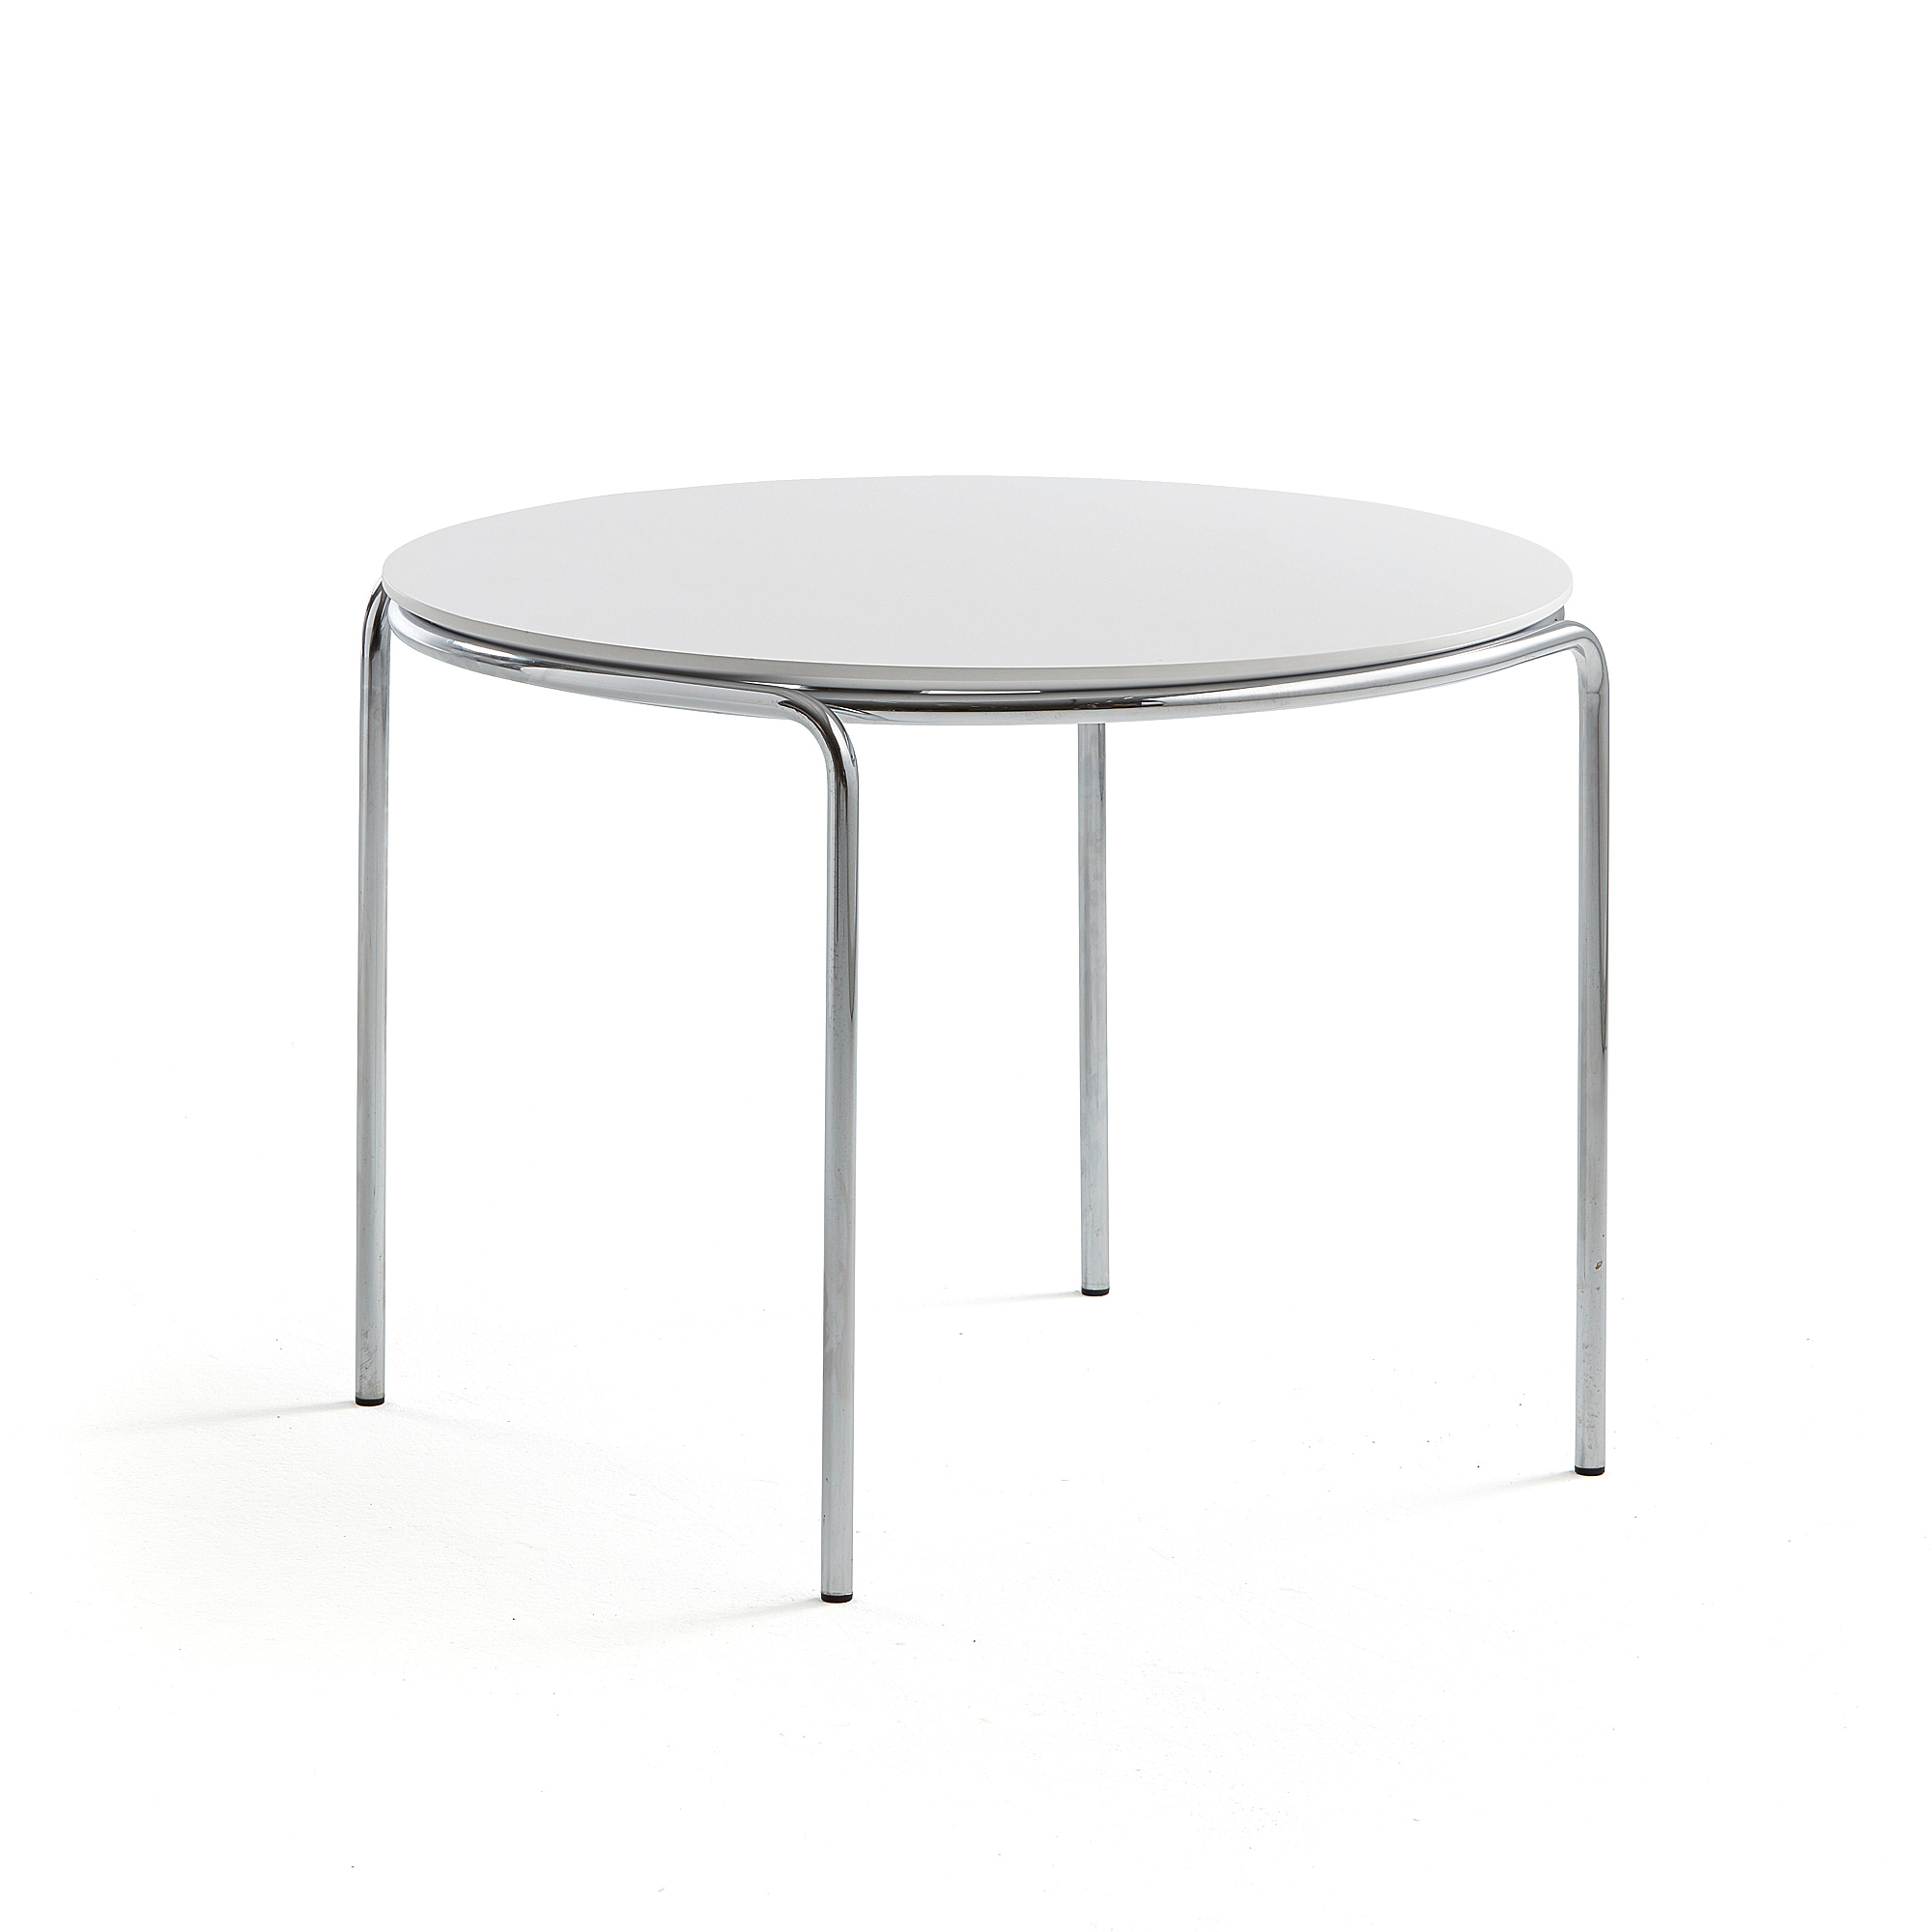 Konferenčný stolík ASHLEY, Ø770 x 530 mm, chróm, biela